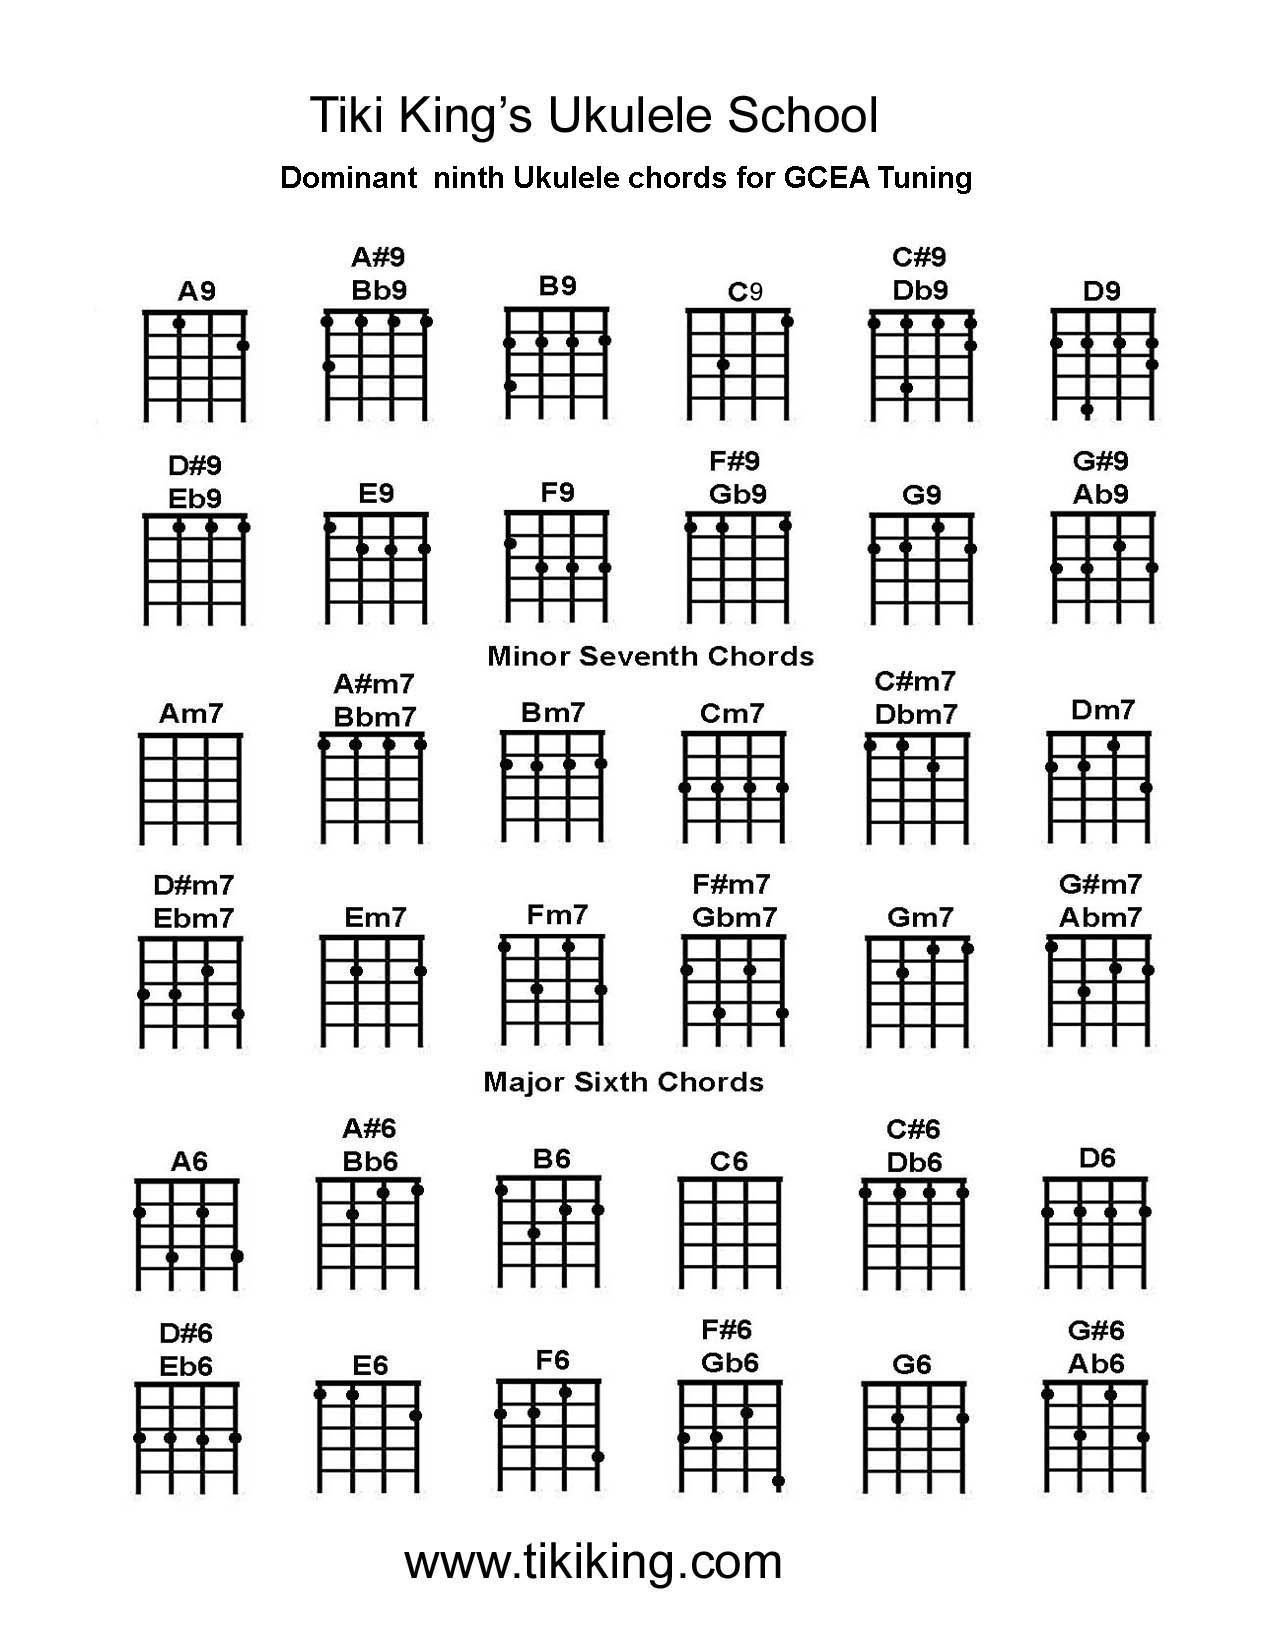 Tiki King's ukulele chord chart 2